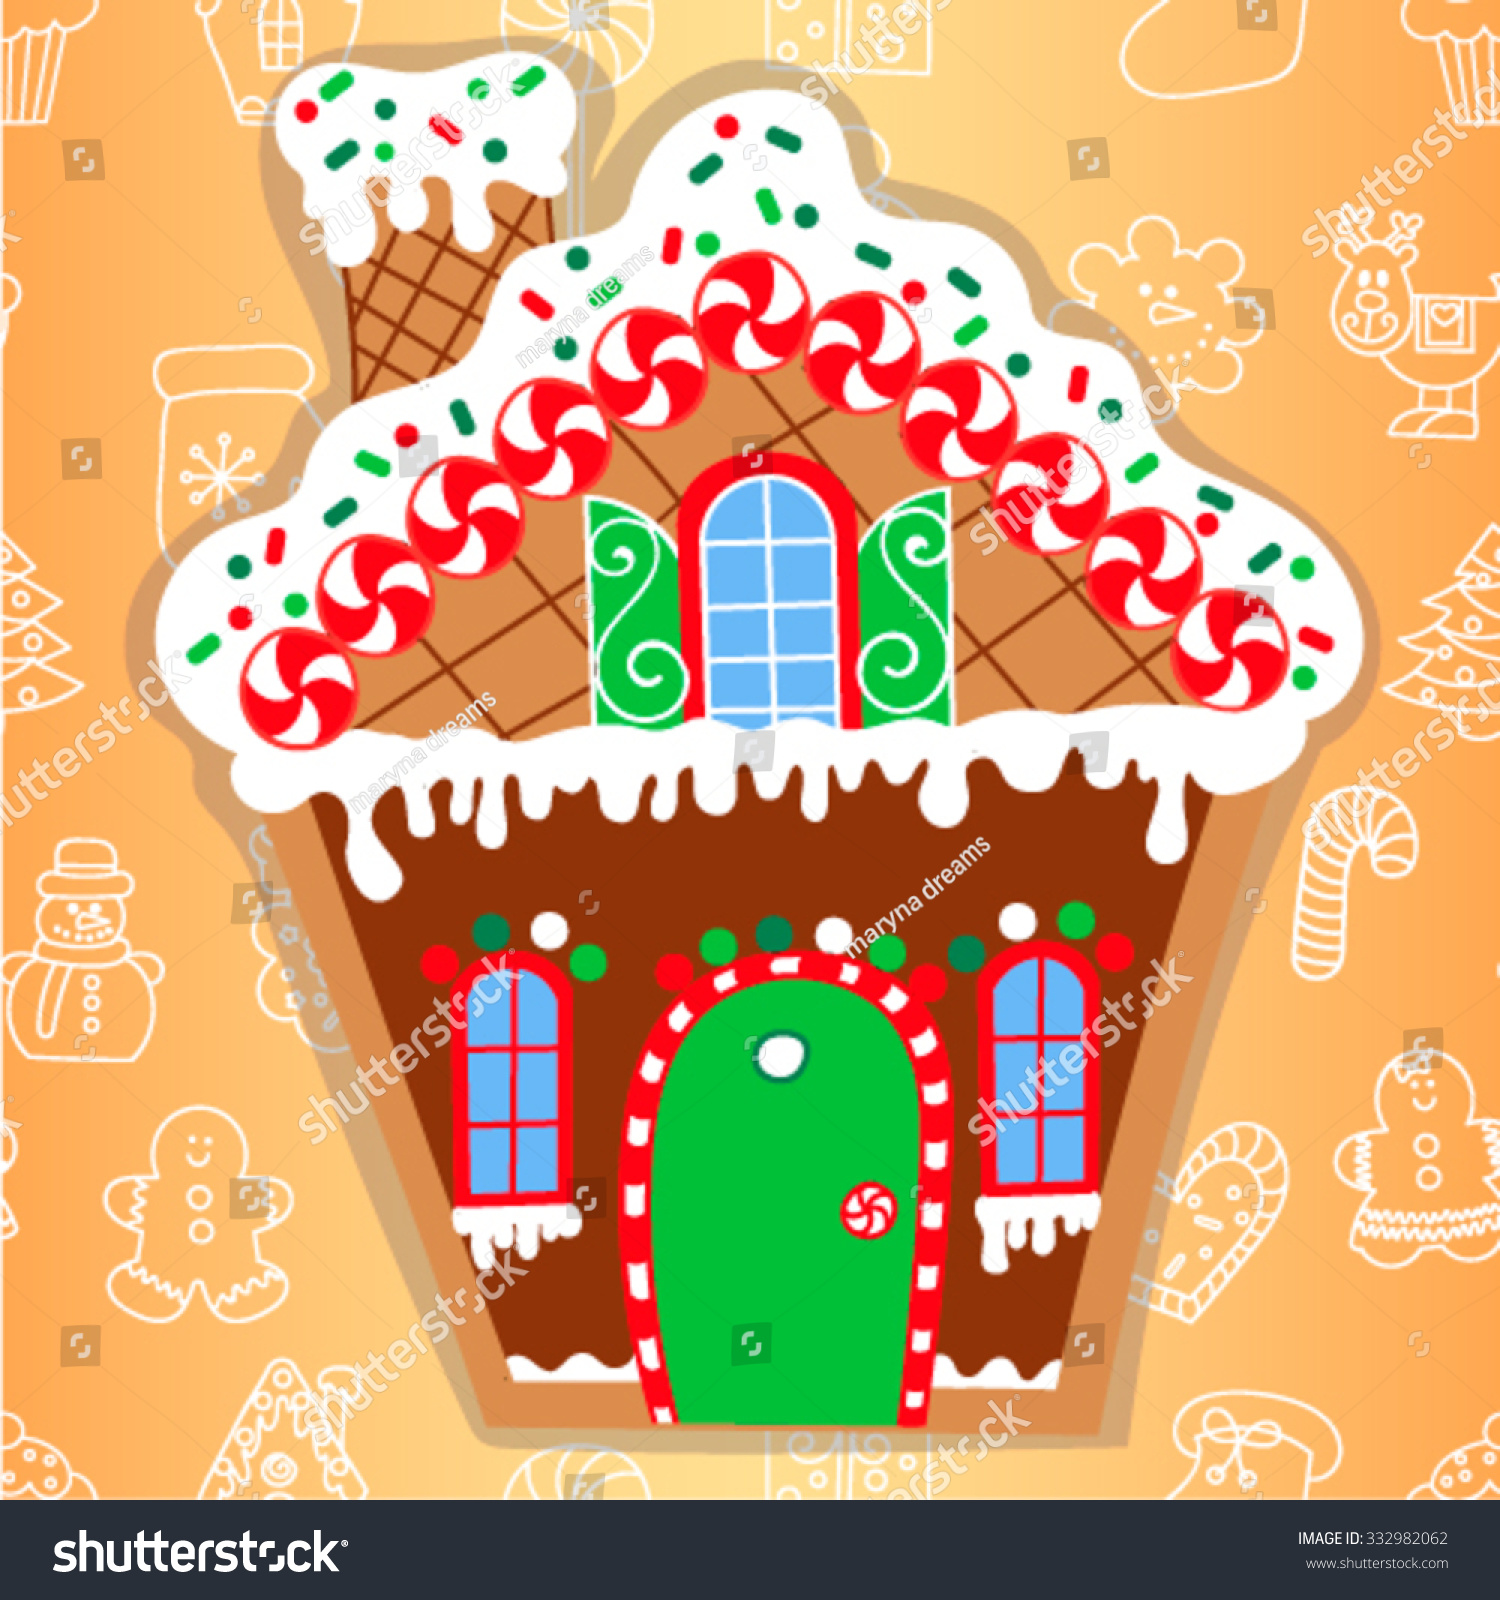 Gingerbread House Vector/Illustration - 332982062 : Shutterstock